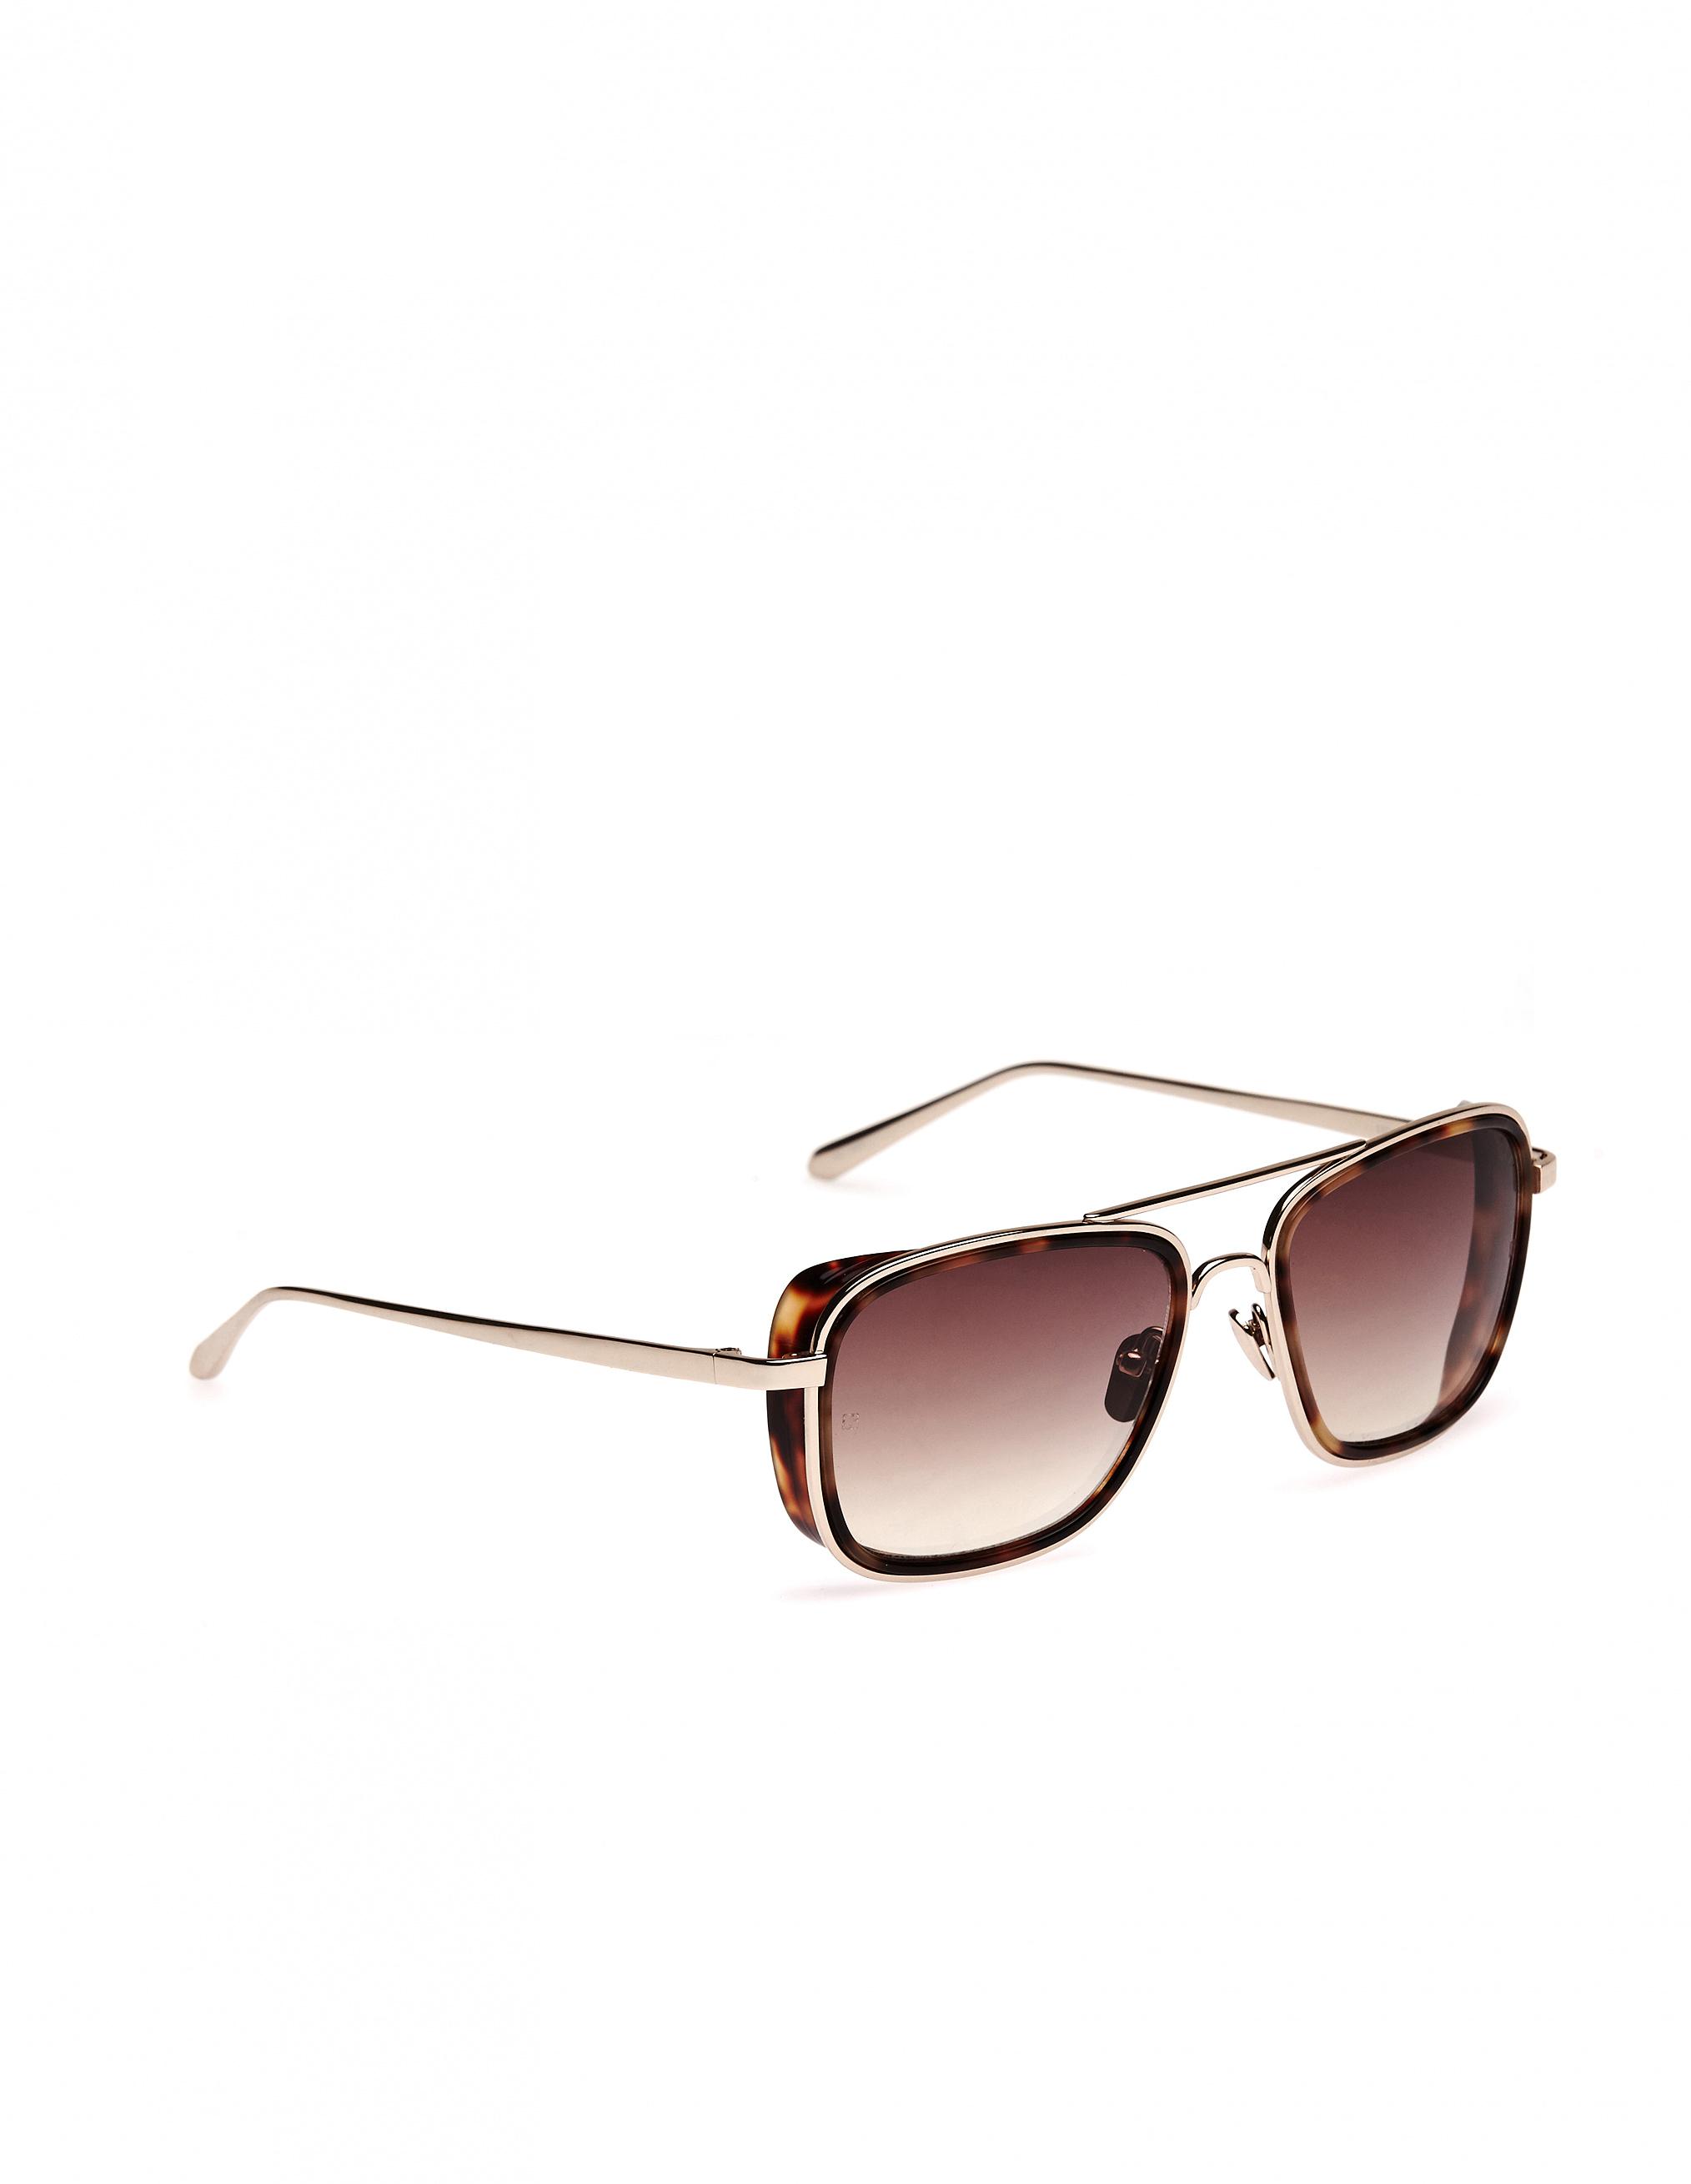 Linda Farrow Luxe Sunglasses in Brown - Lyst